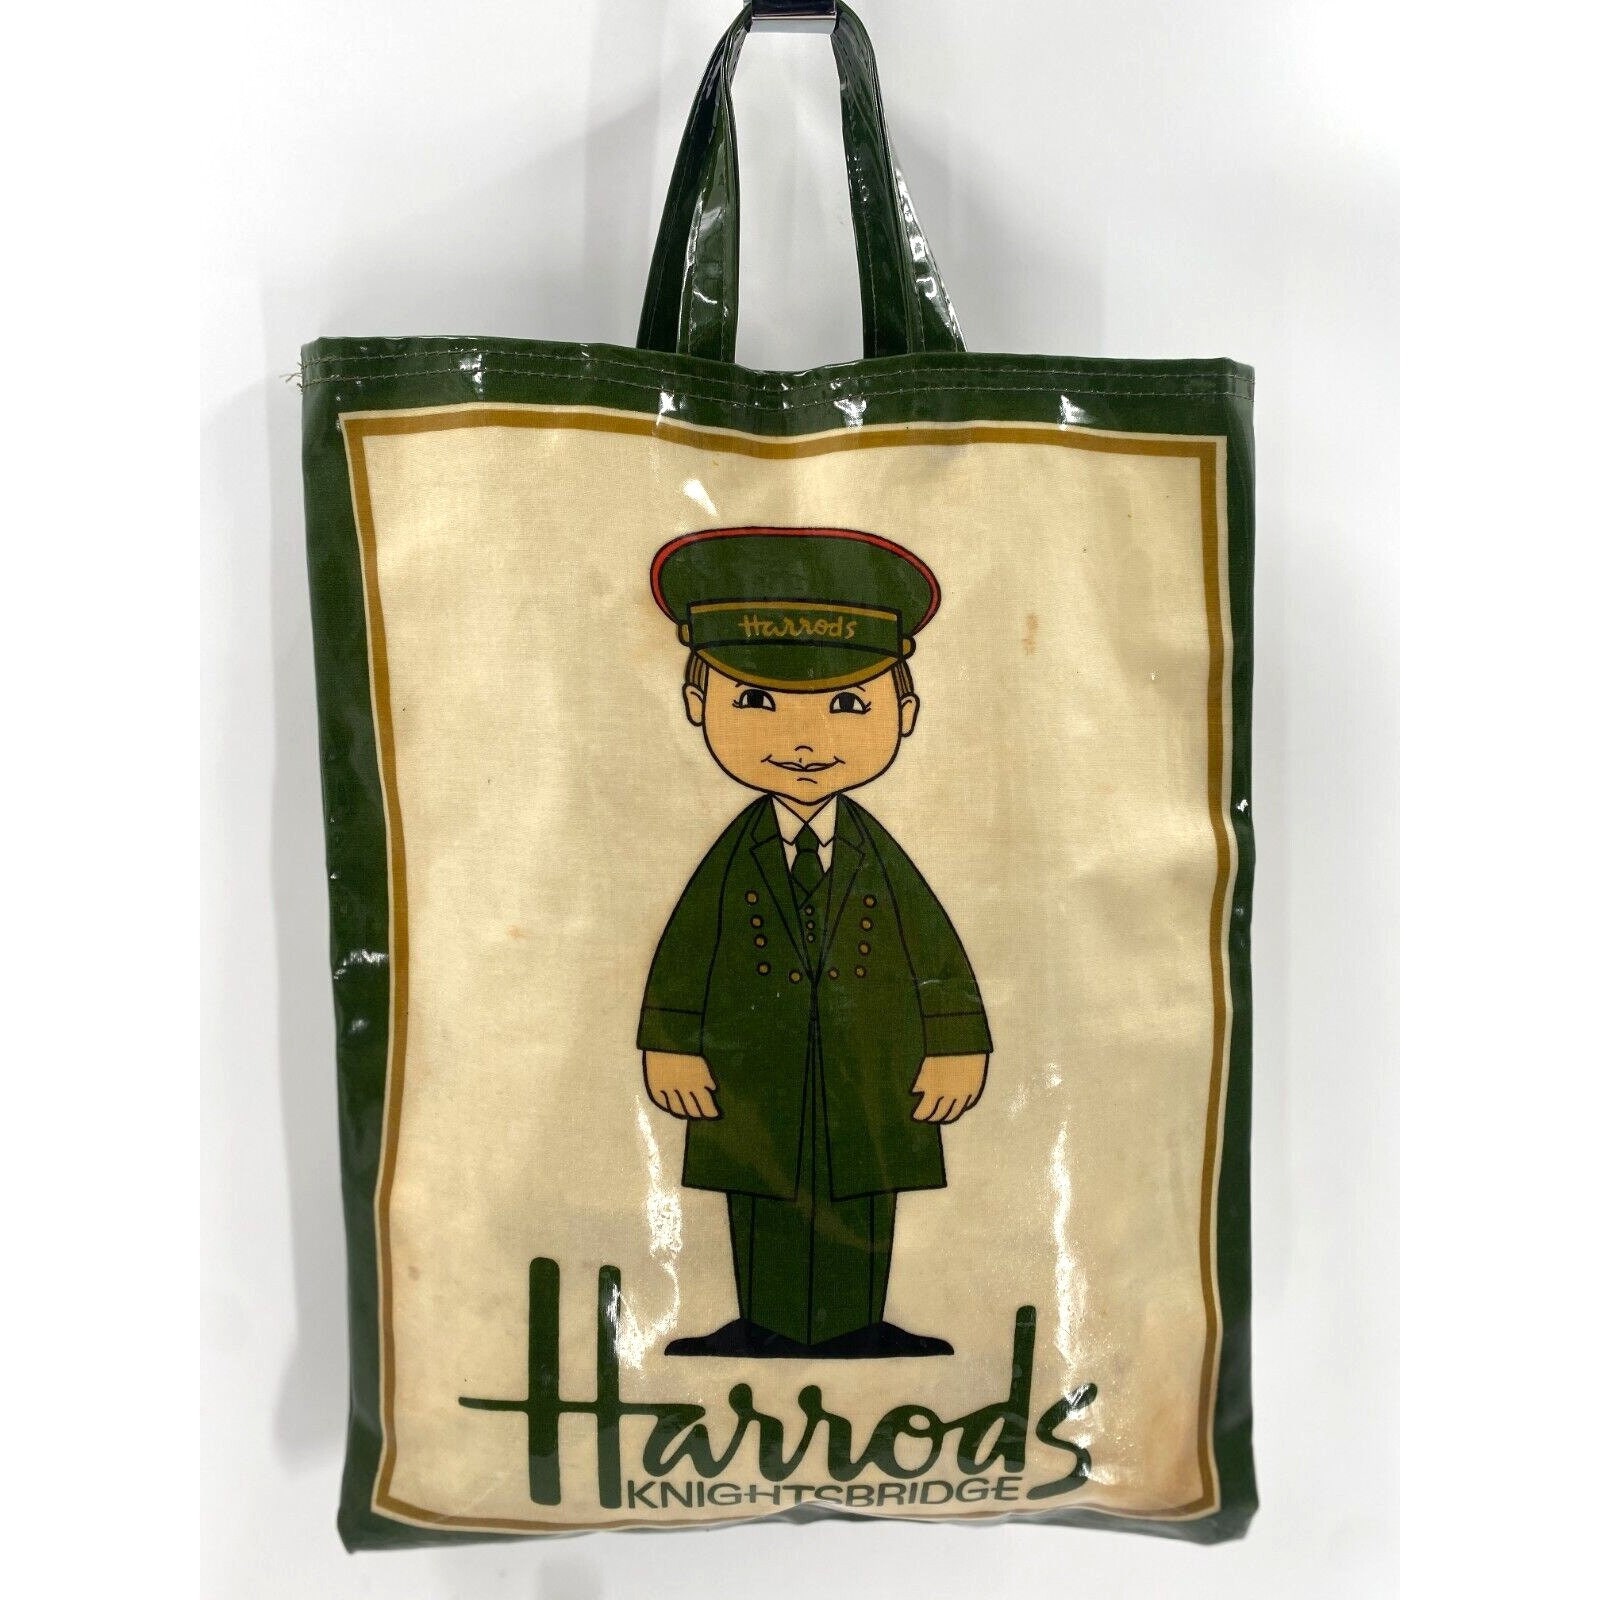 Harrods Brown tote Pre Owned | eBay